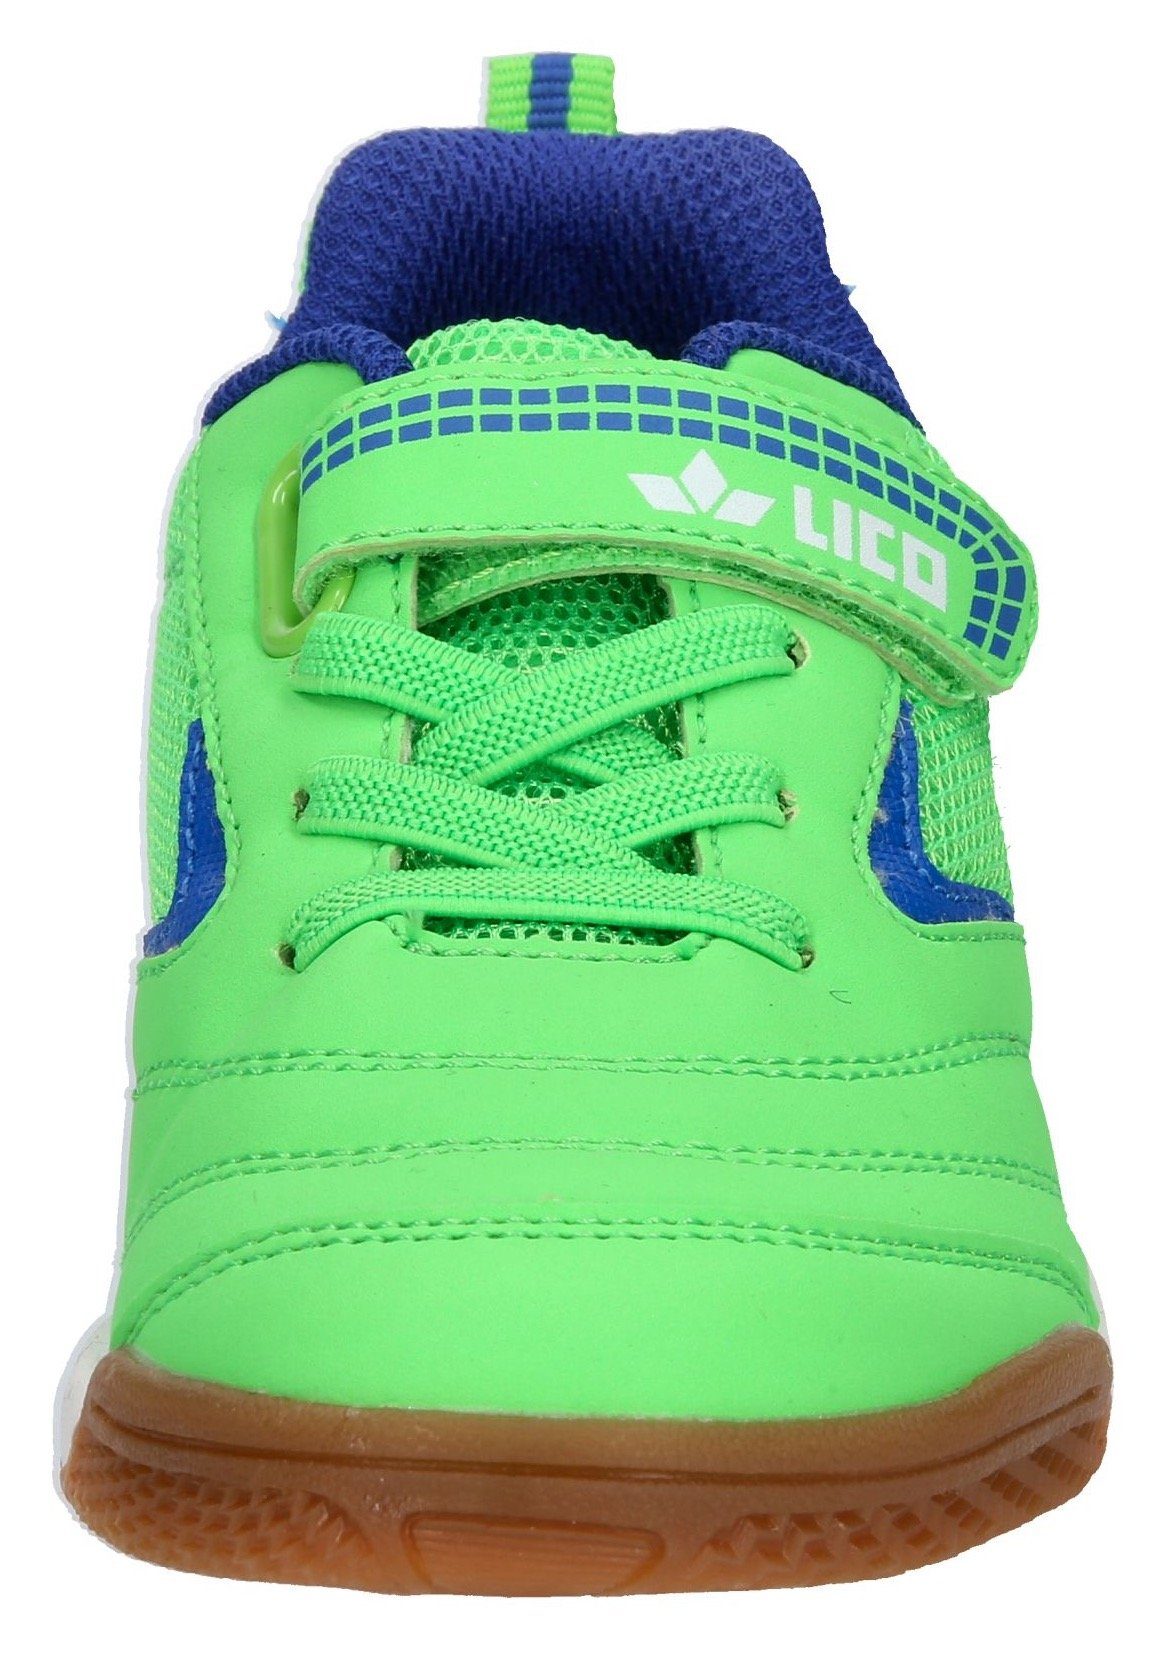 Lico heller Sneaker Ari WMS grün-blau mit Laufsohle VS